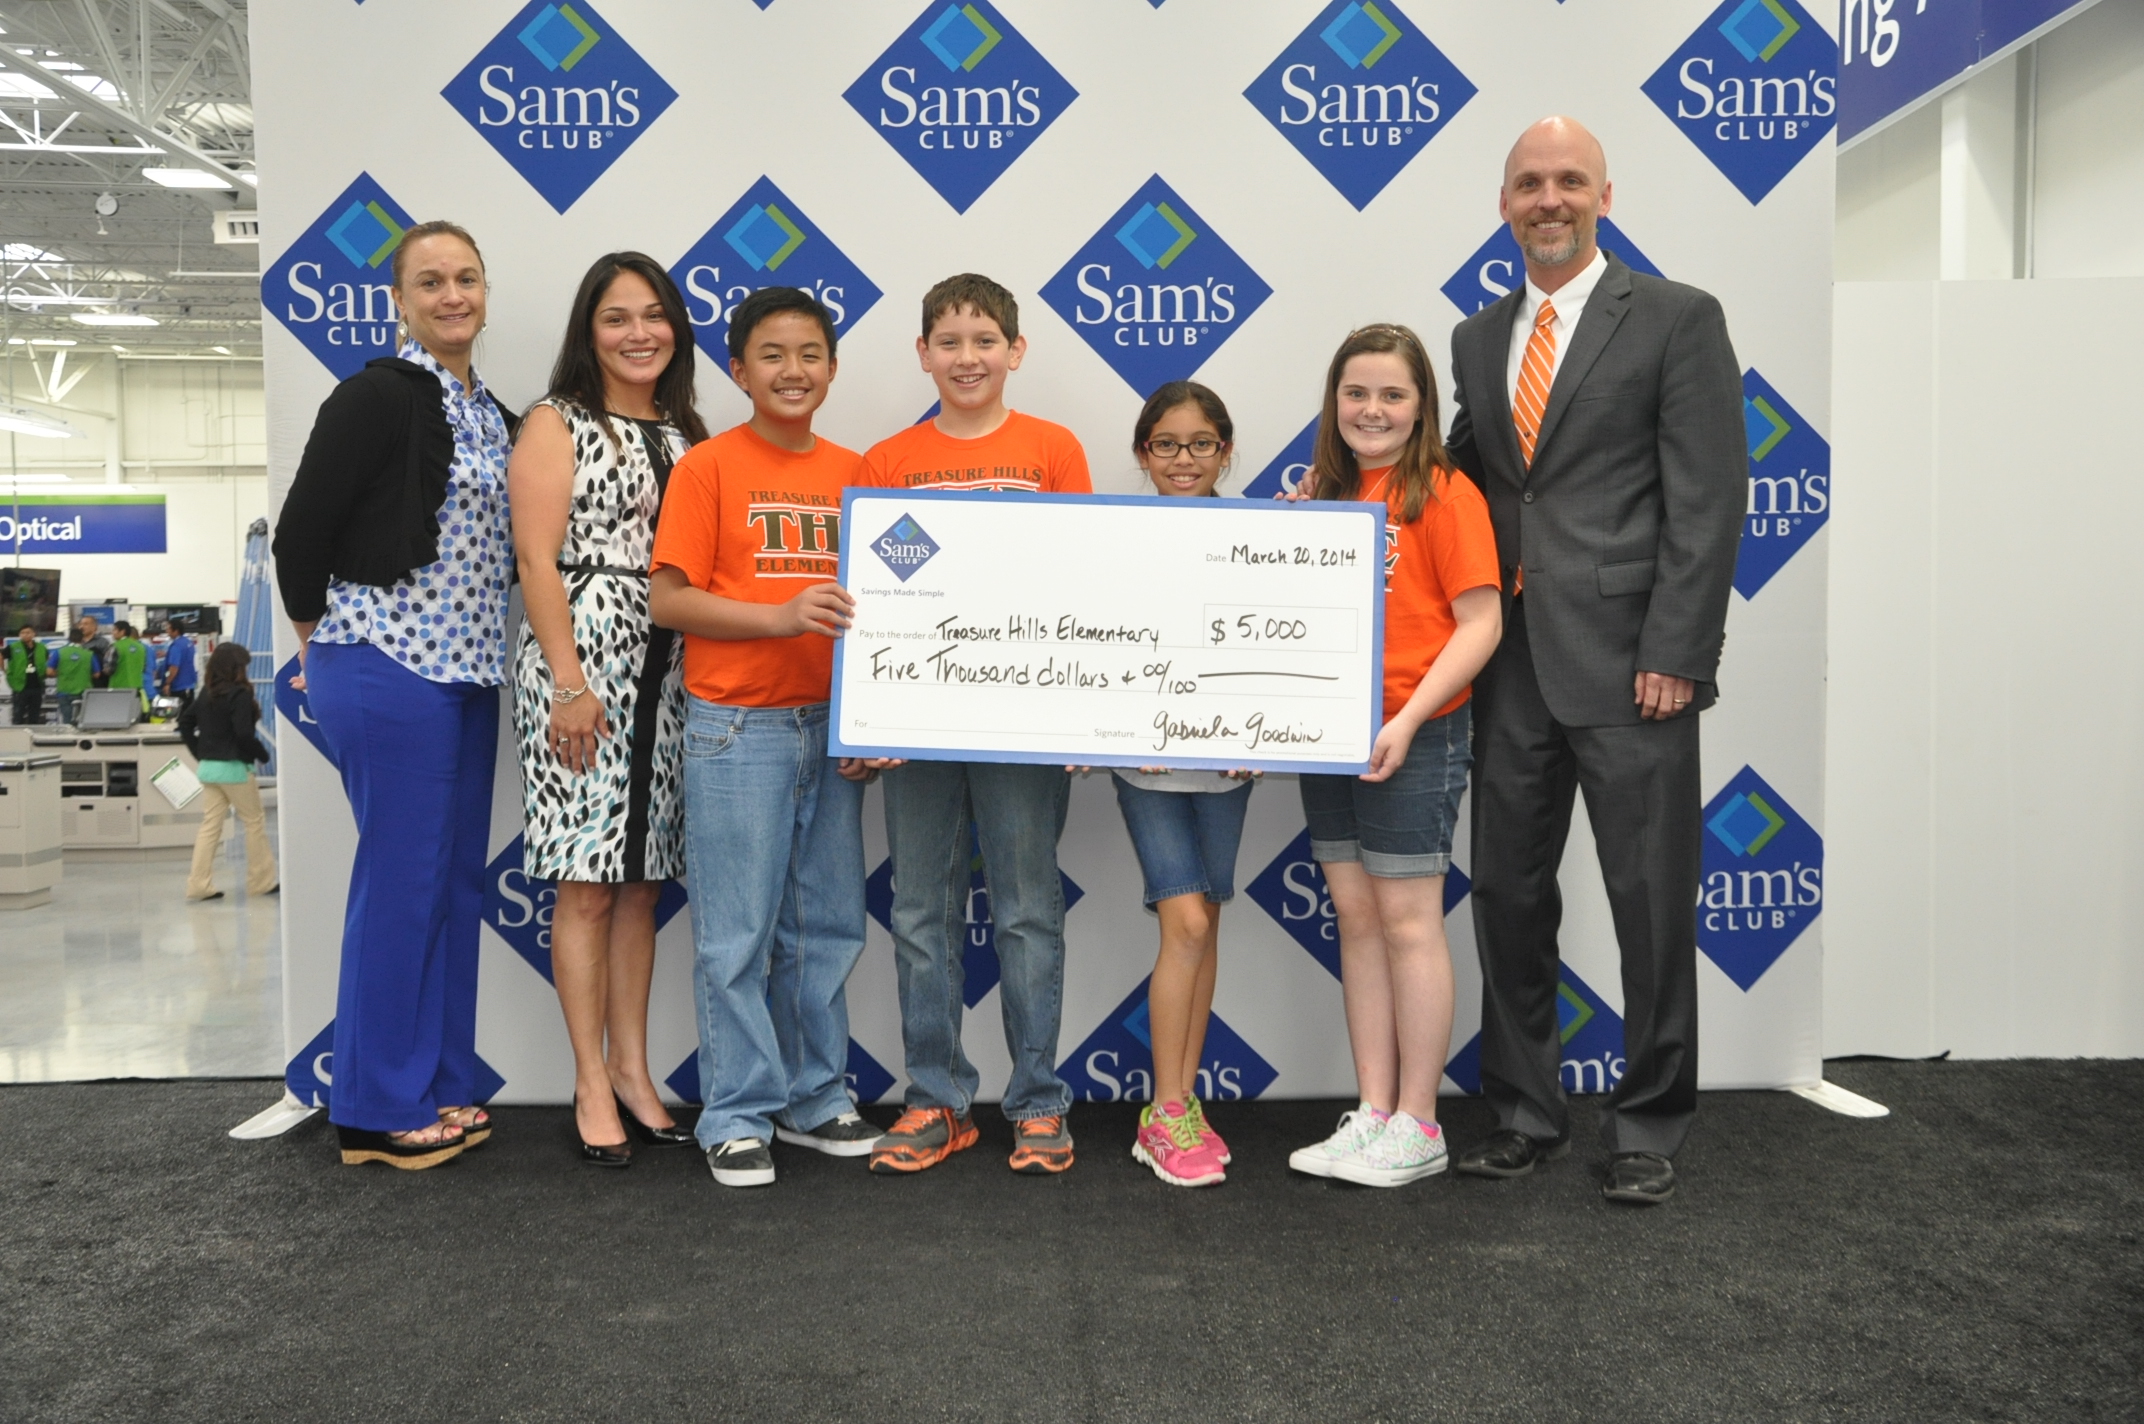 Sam’s Club donates $5,000 to Treasure Hills Elementary